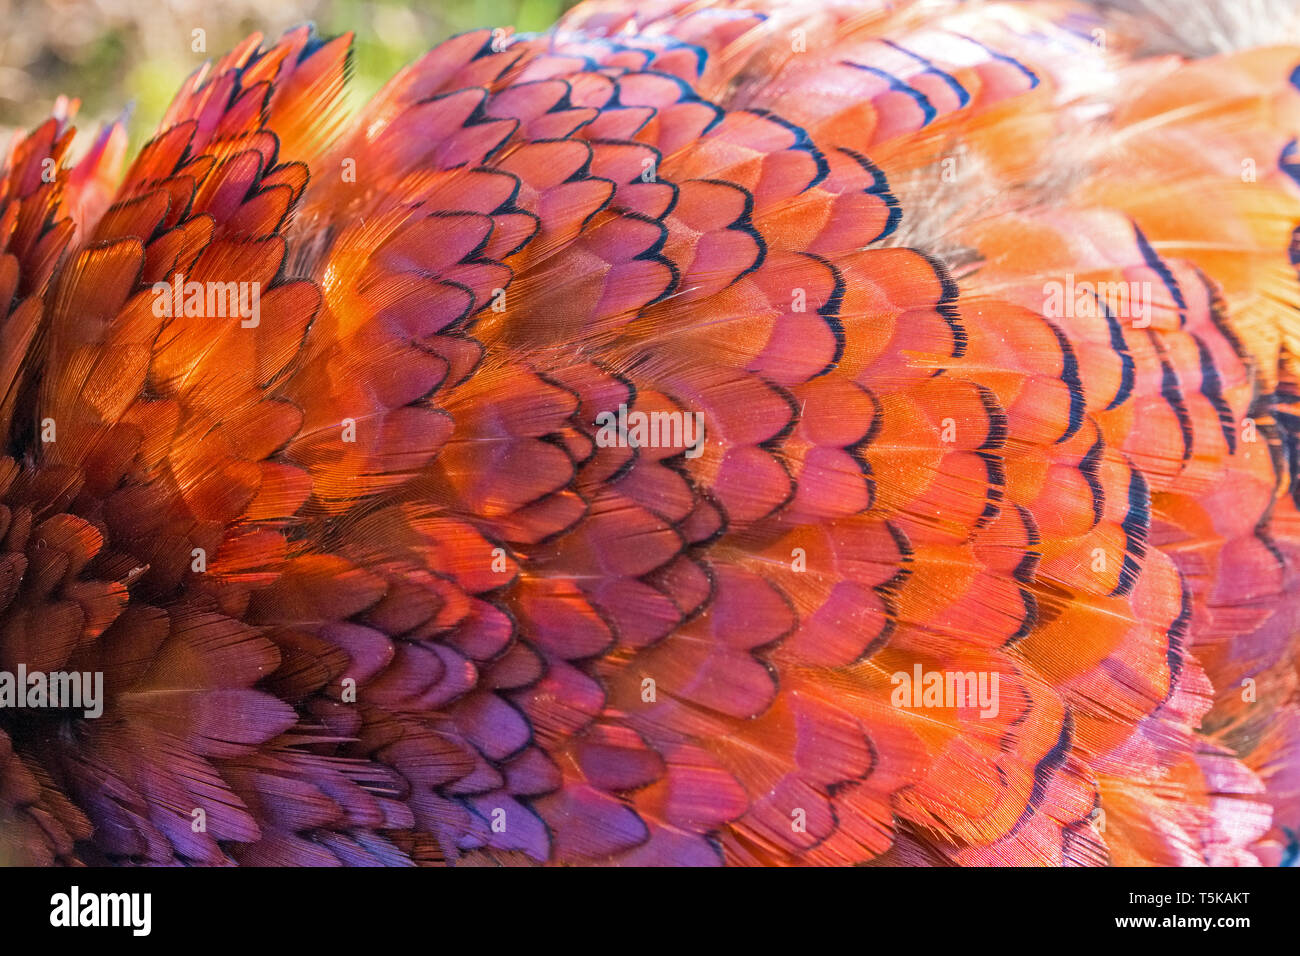 Detalle de faisán del plumaje de colores brillantes Foto de stock